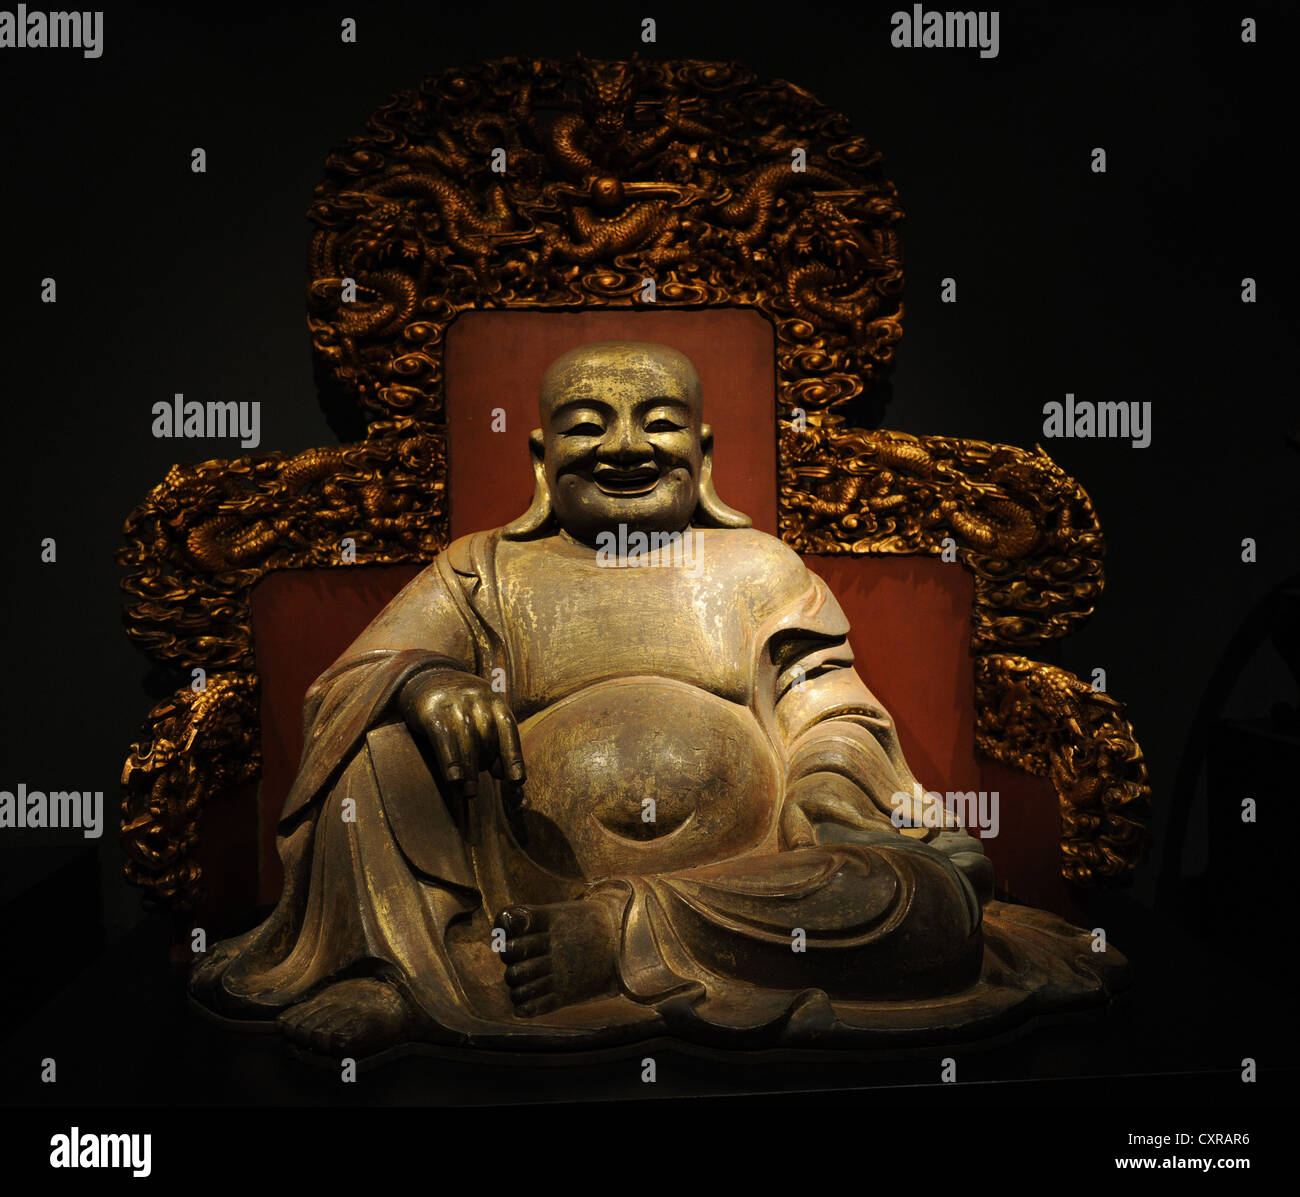 Arte chino Heshang de Buda. China, la Dinastía Qing (1644-1911). Ny Carlsberg Glyptotek. Copenhague. Dinamarca. Foto de stock